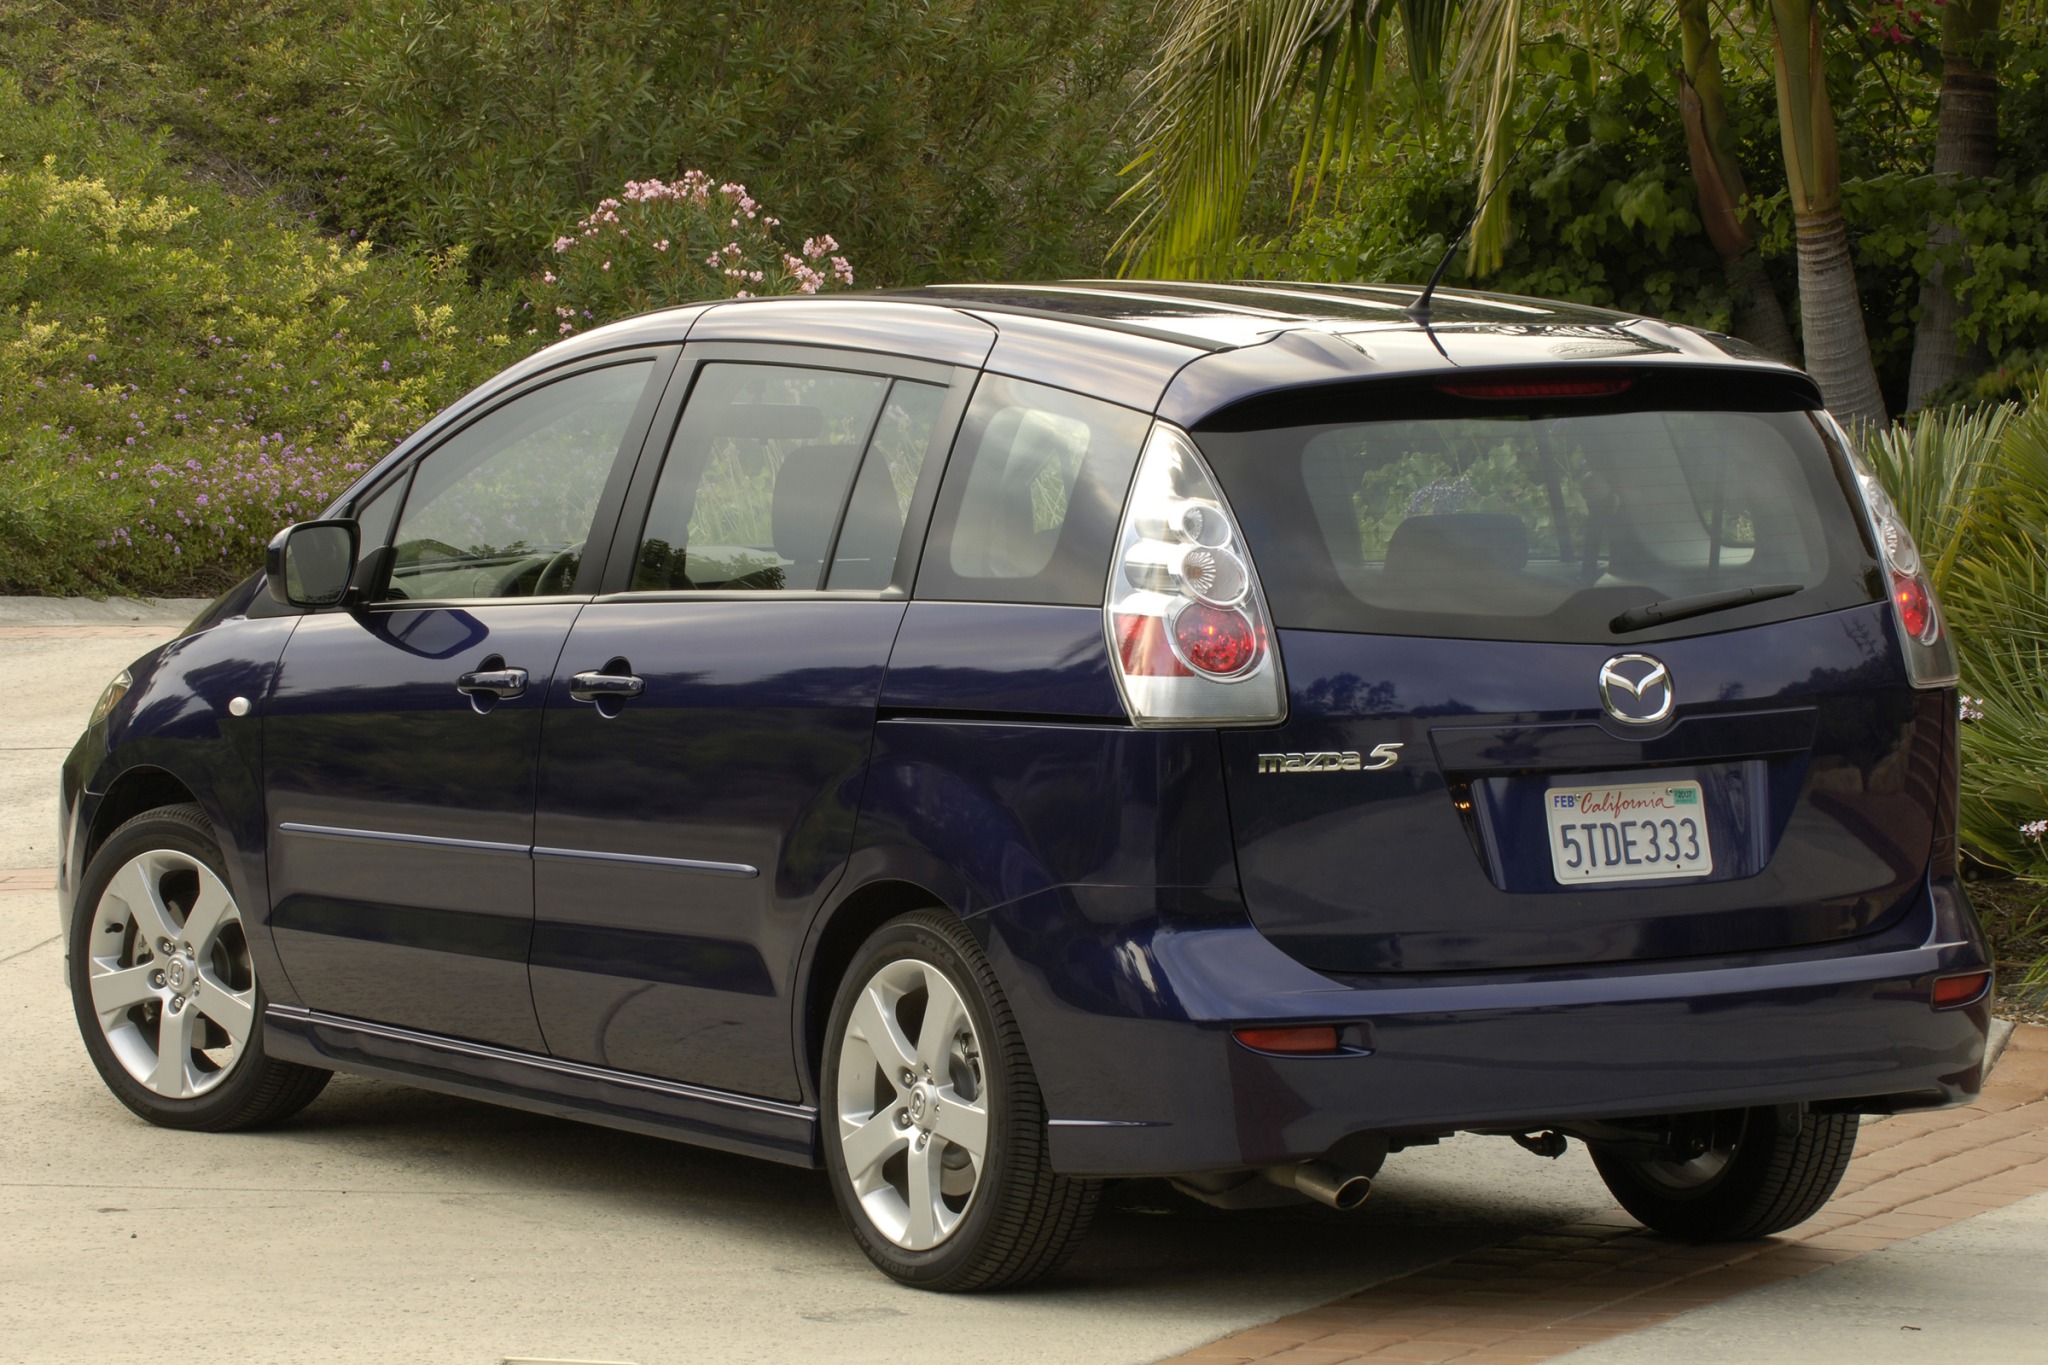 Мазда 5 минивэн купить. Mazda5 компактвэн 2007. Mazda 5 2007. Mazda 5 Minivan 2007. Mazda 5 минивэн 2008.